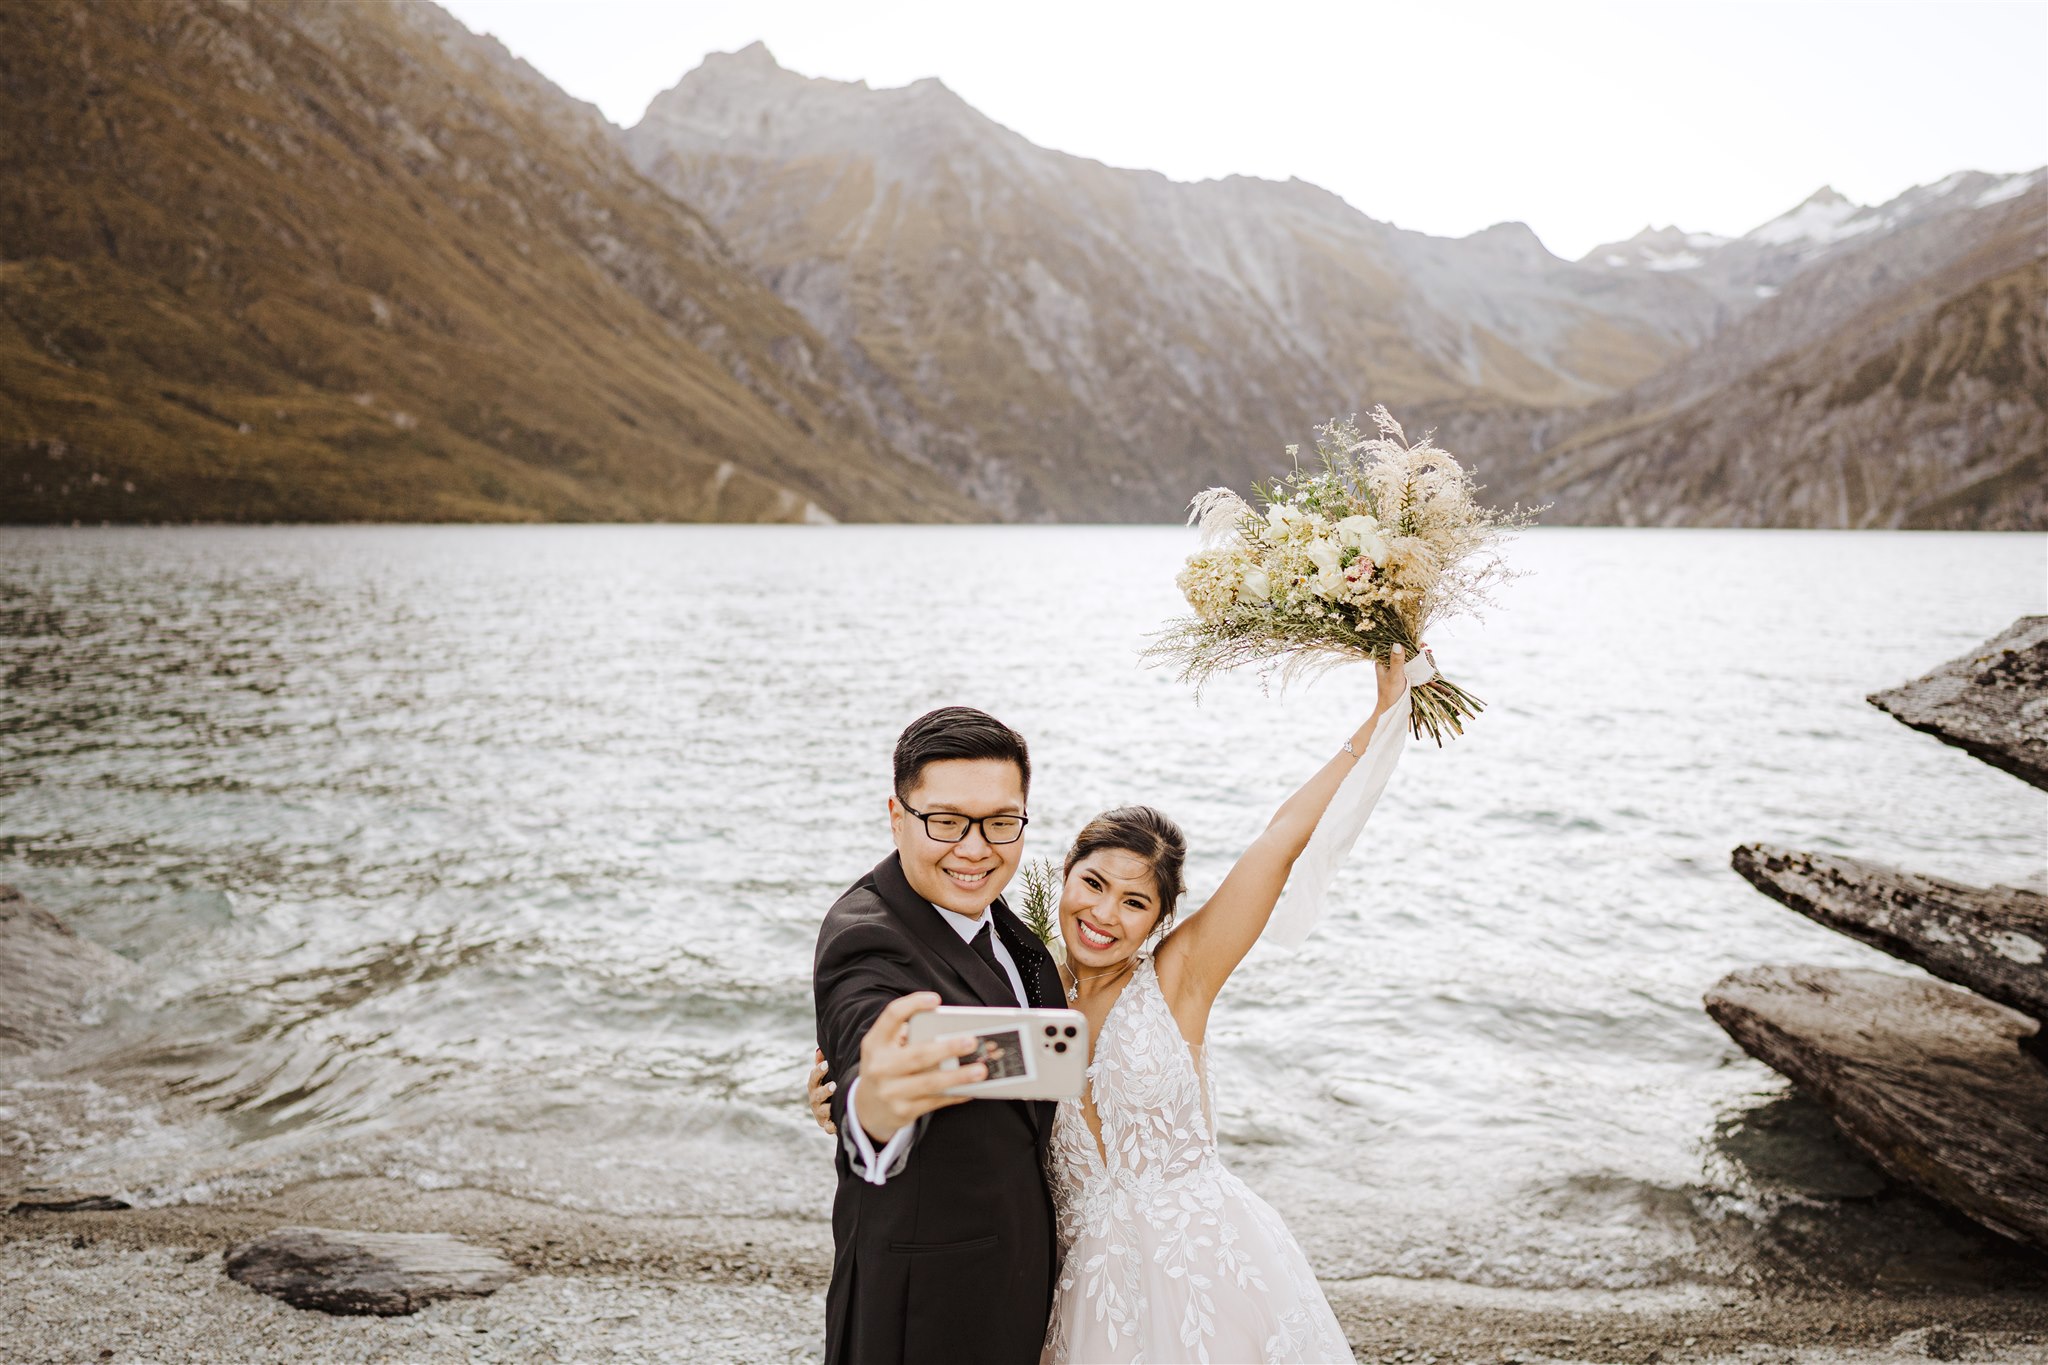 bride and groom take selfie after wedding ceremony at Lochnagar in Queenstown, New Zealand